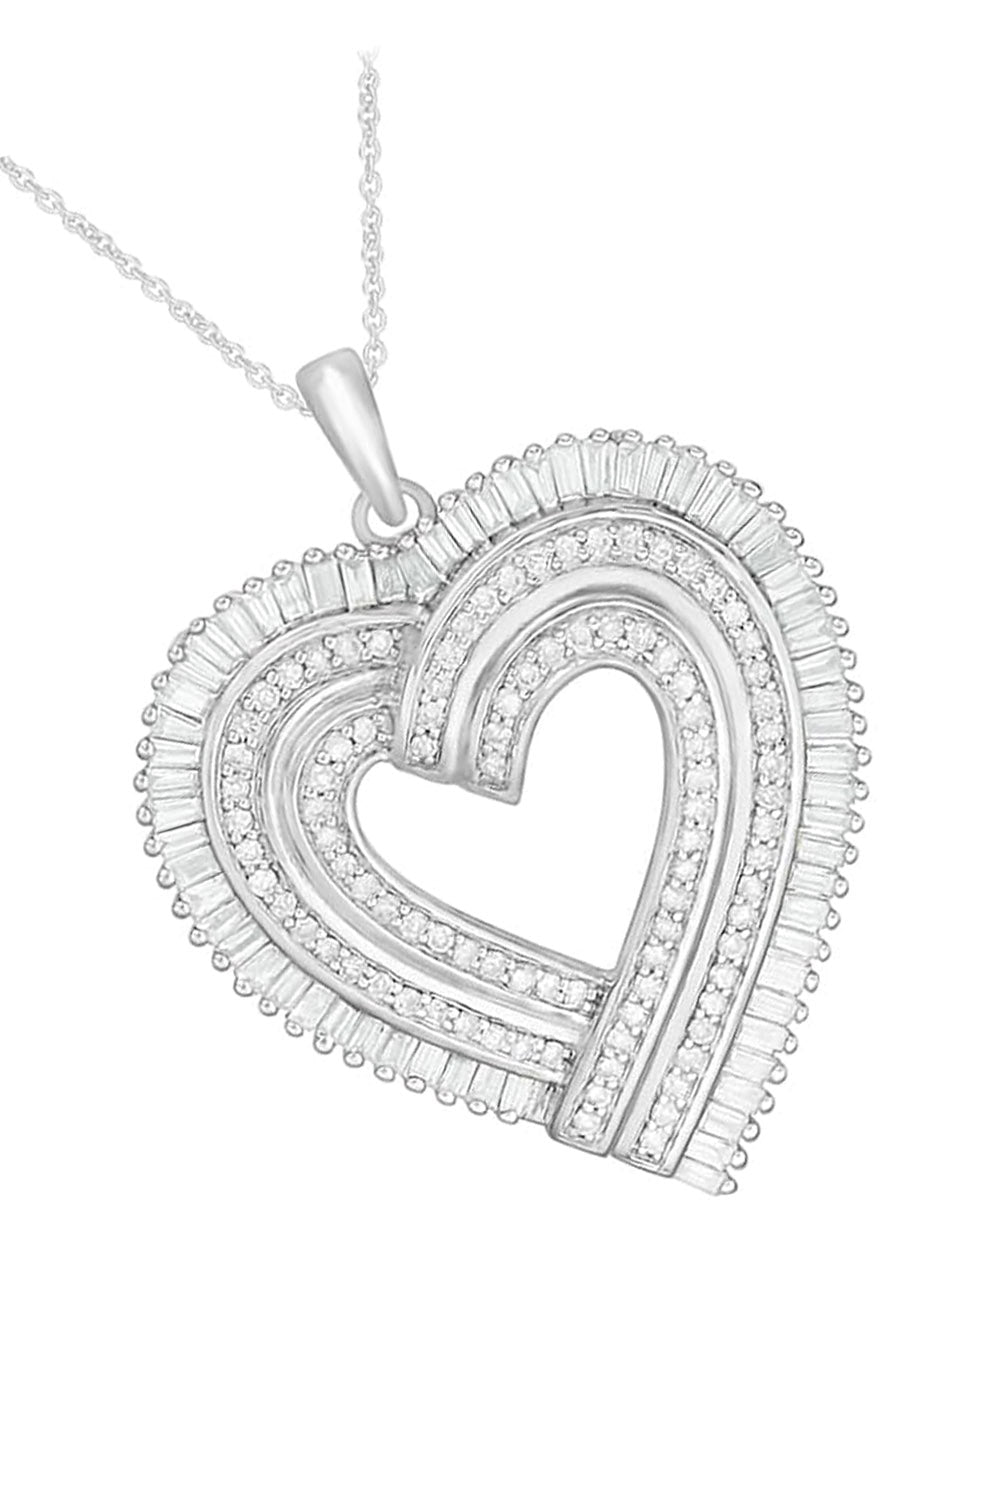 White Gold Color Multi-Row Heart Pendant Necklace